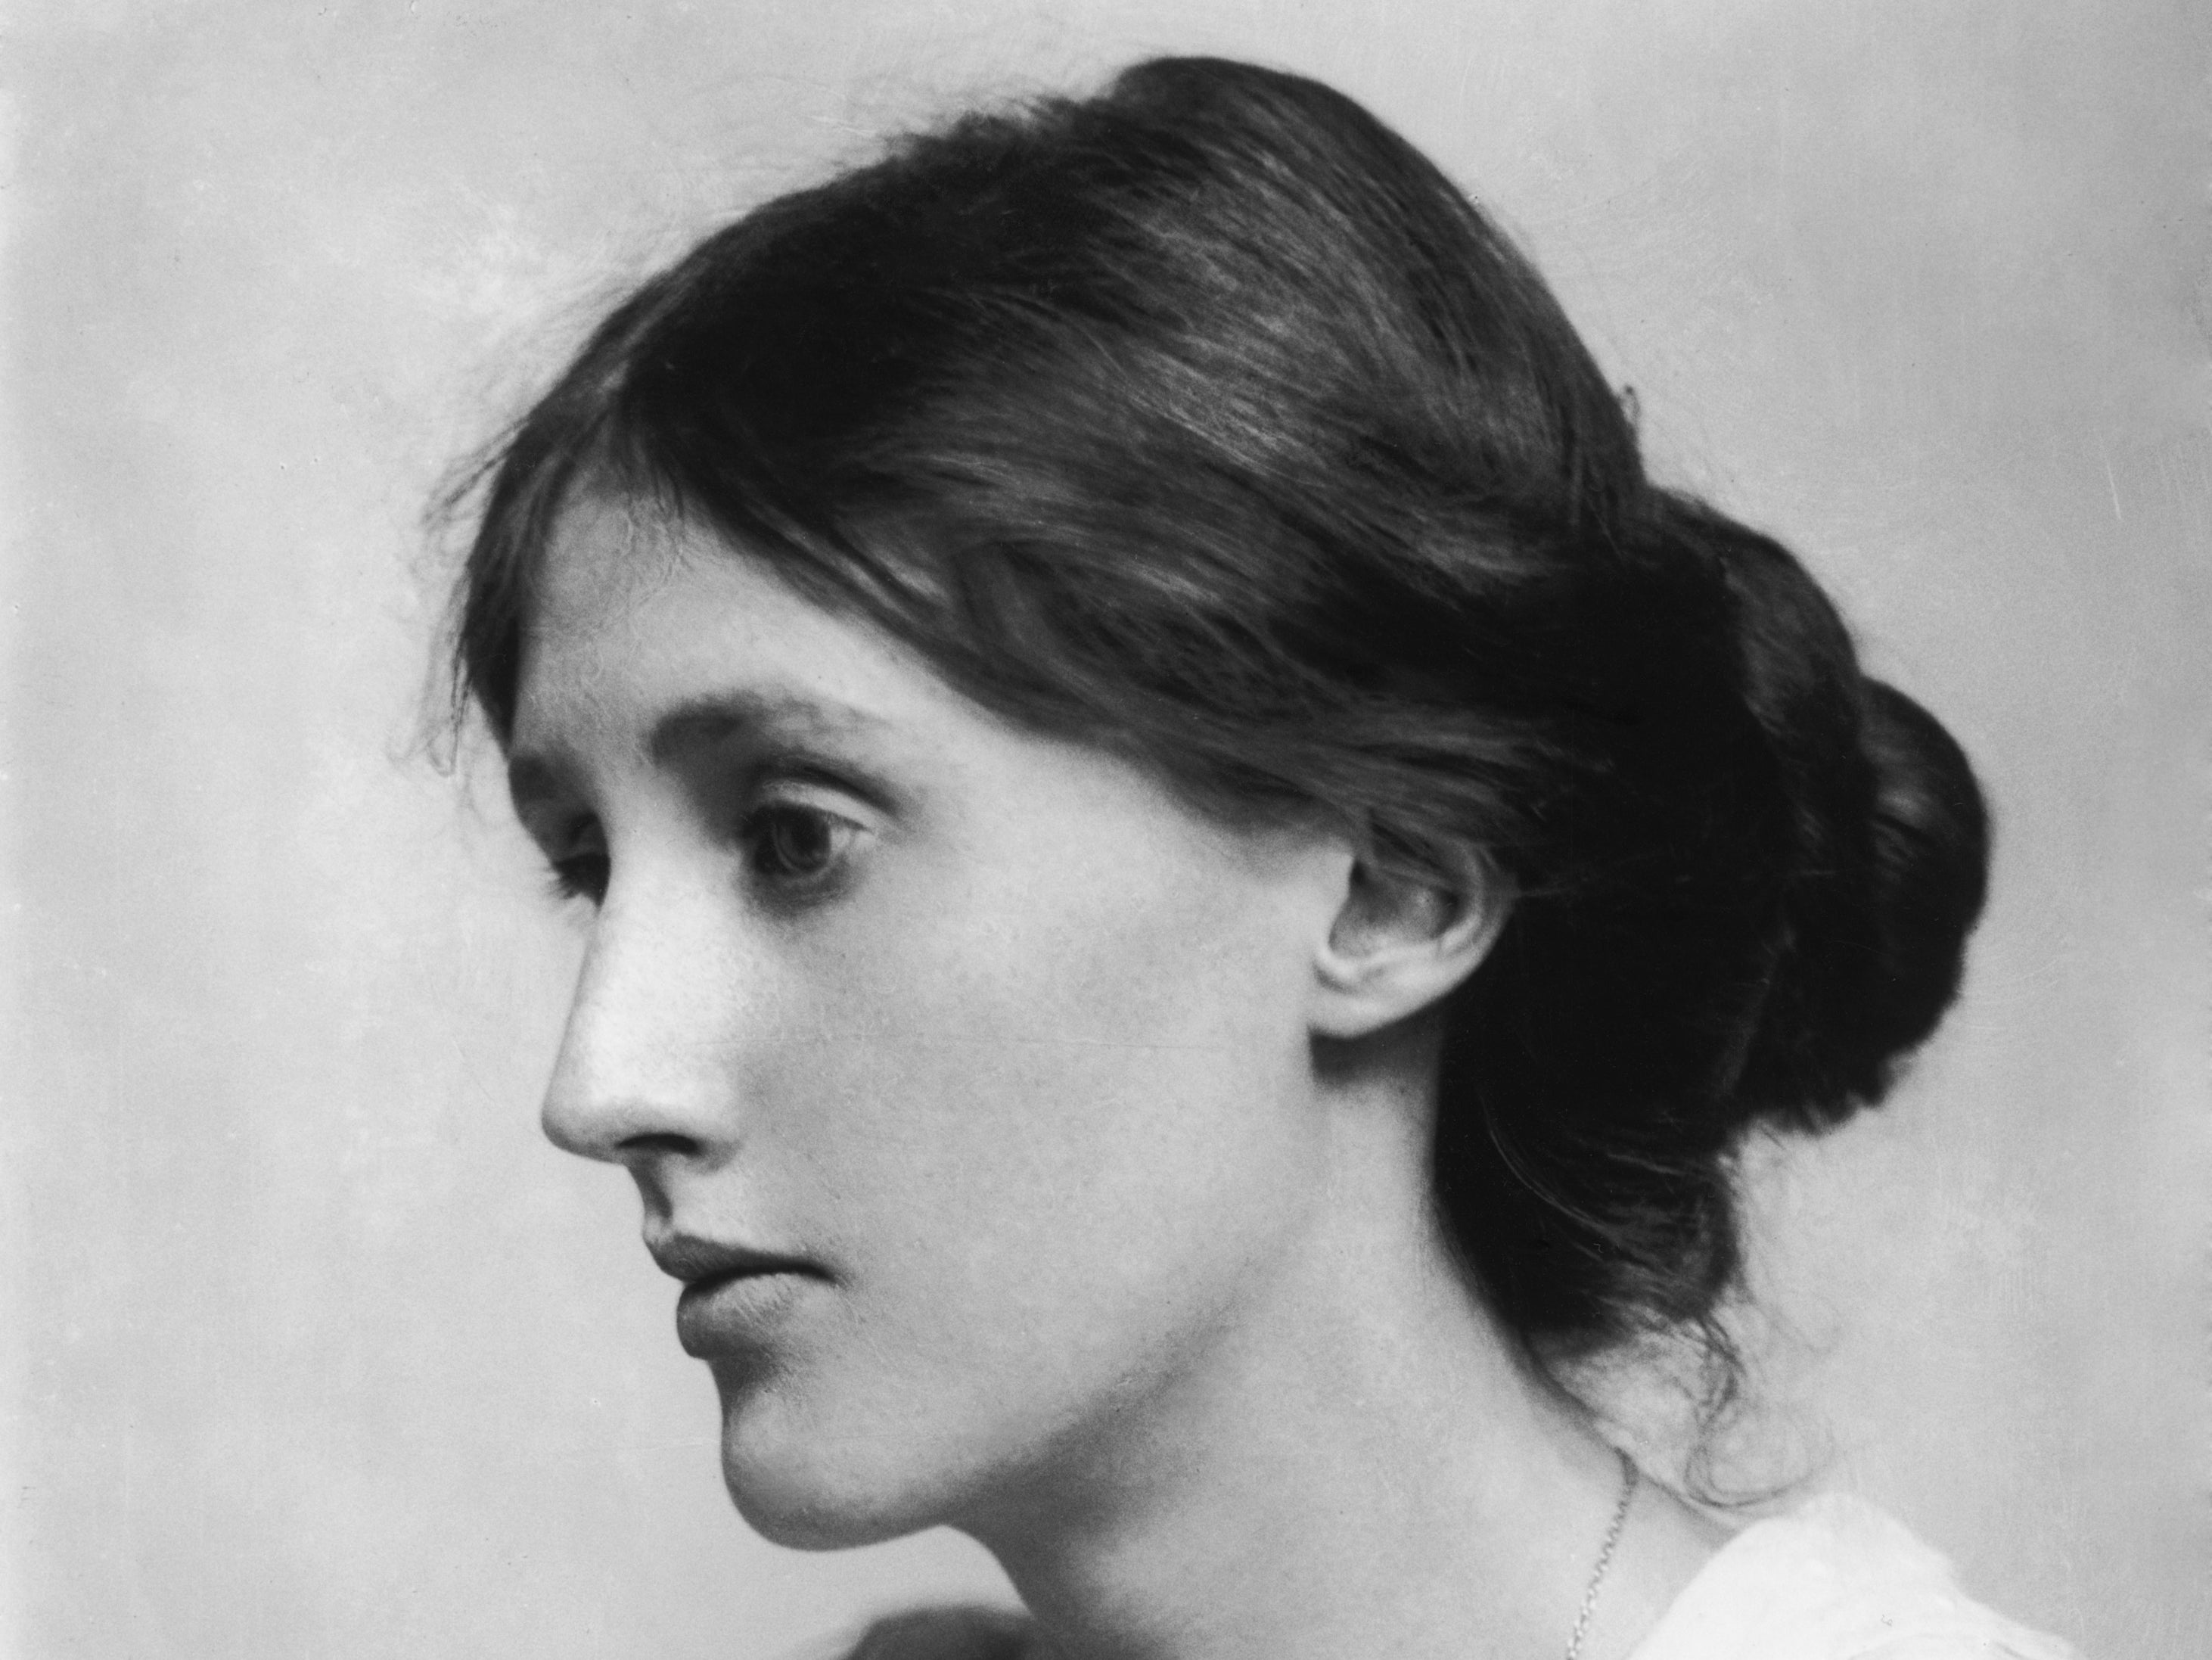 English novelist and critic Virginia Woolf (1882 - 1941), in 1902